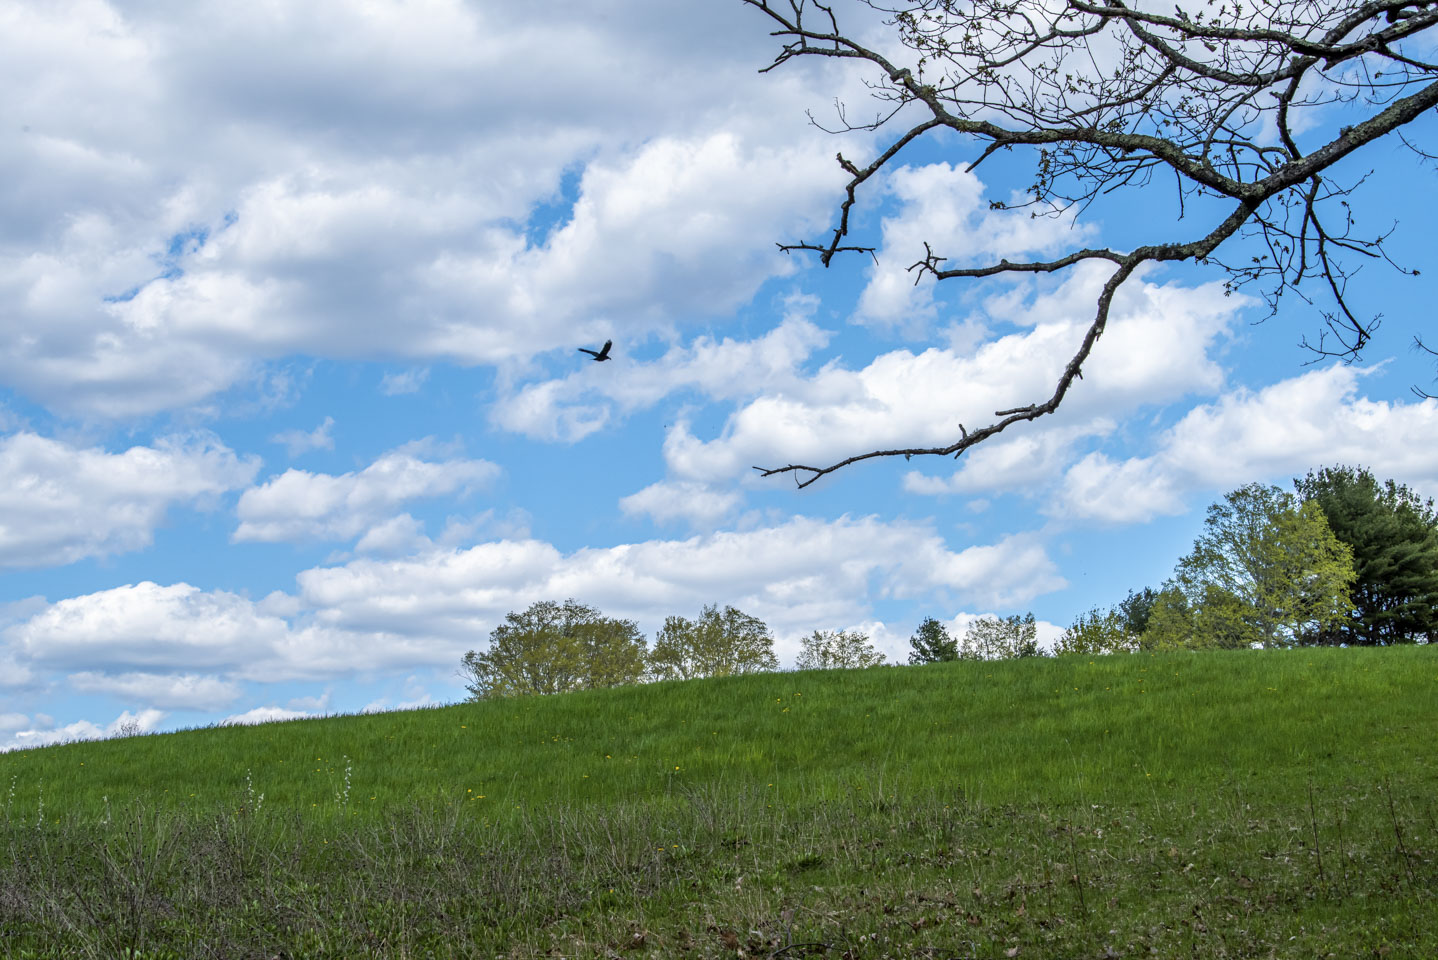 A bird flying over a field